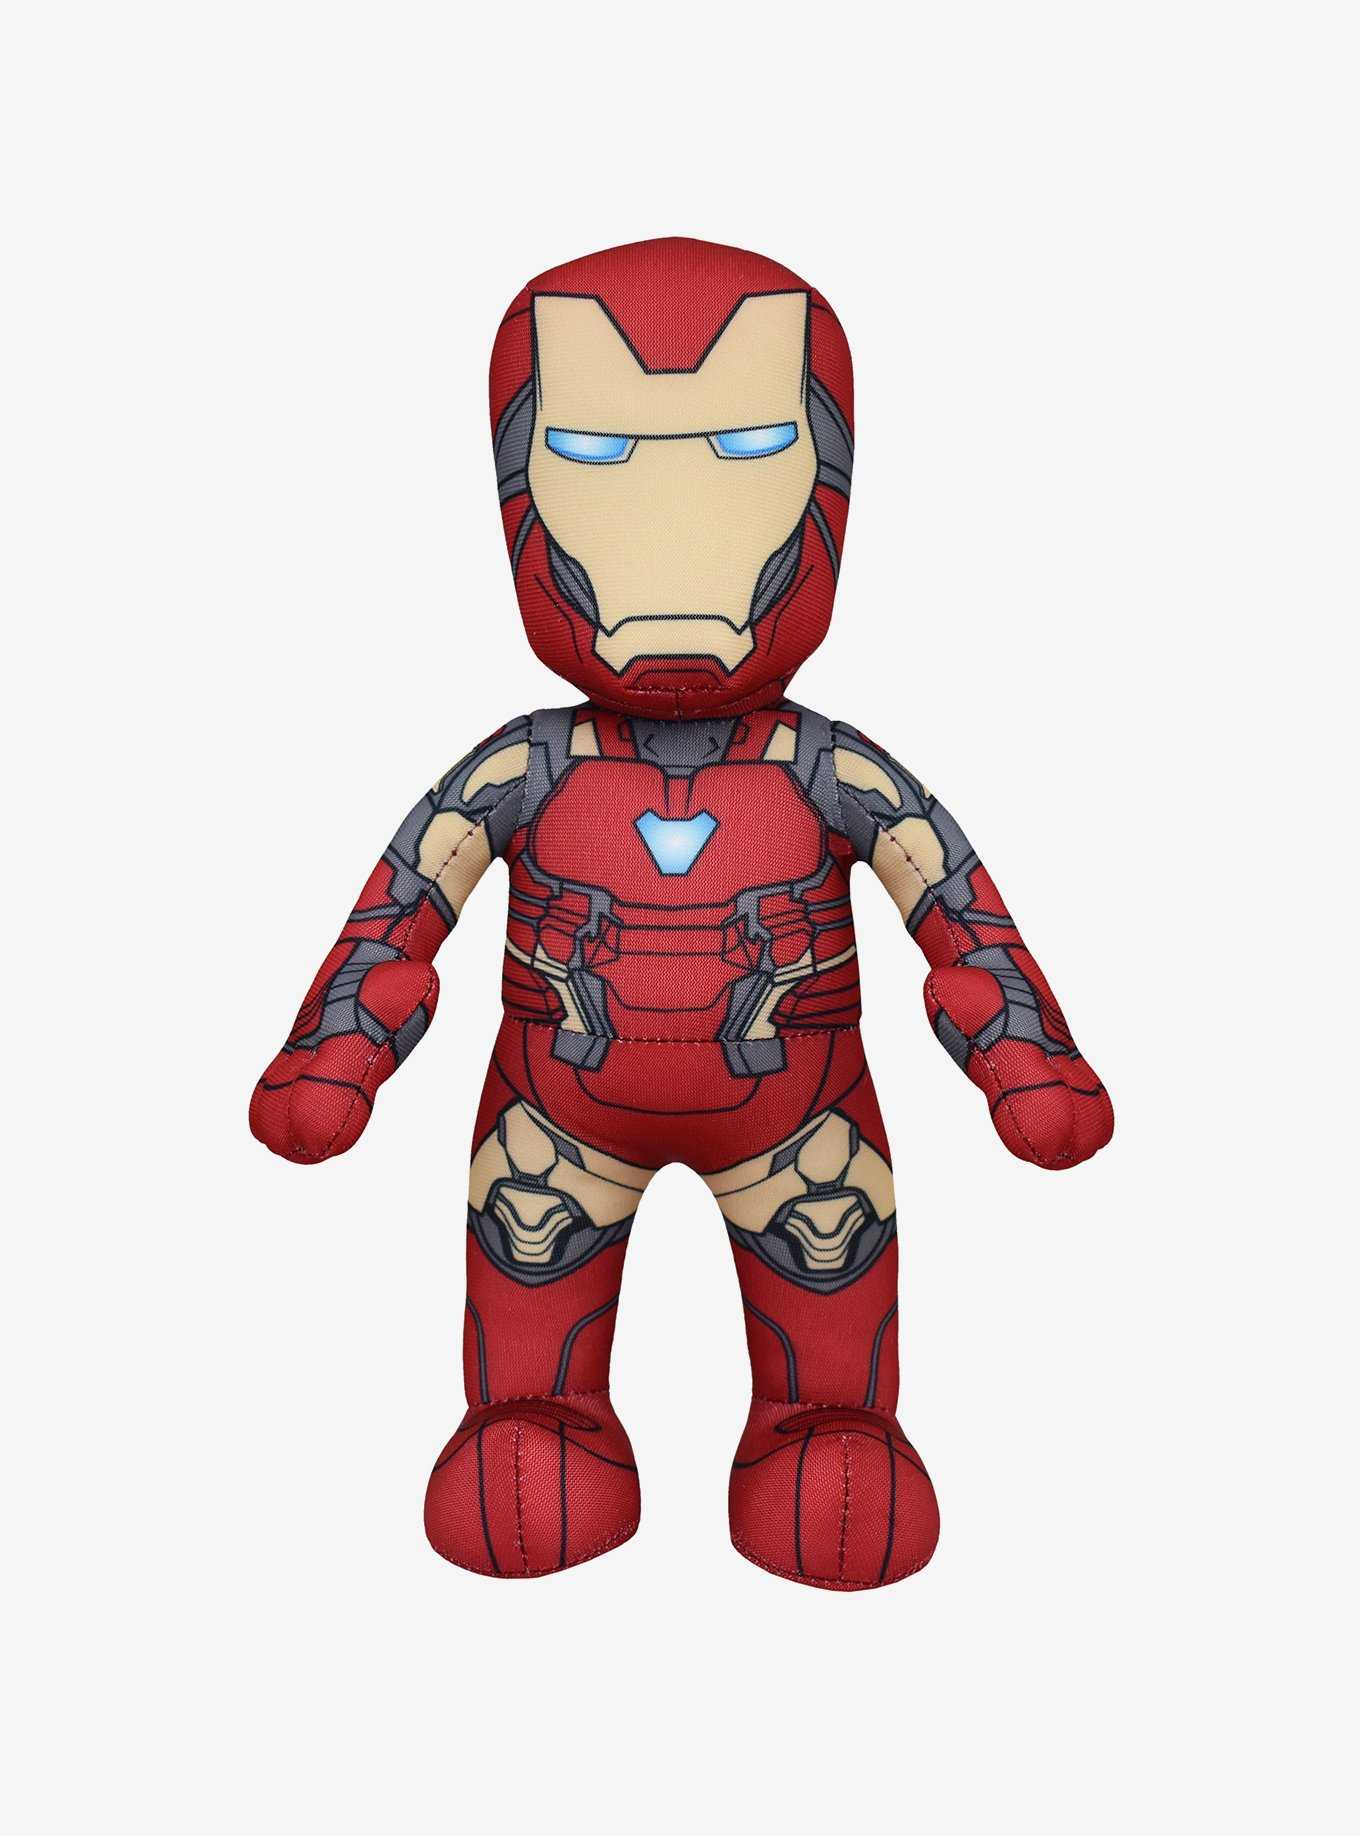 Buy Stark Industries - Iron Man T-shirt • SOLIDPOP ®